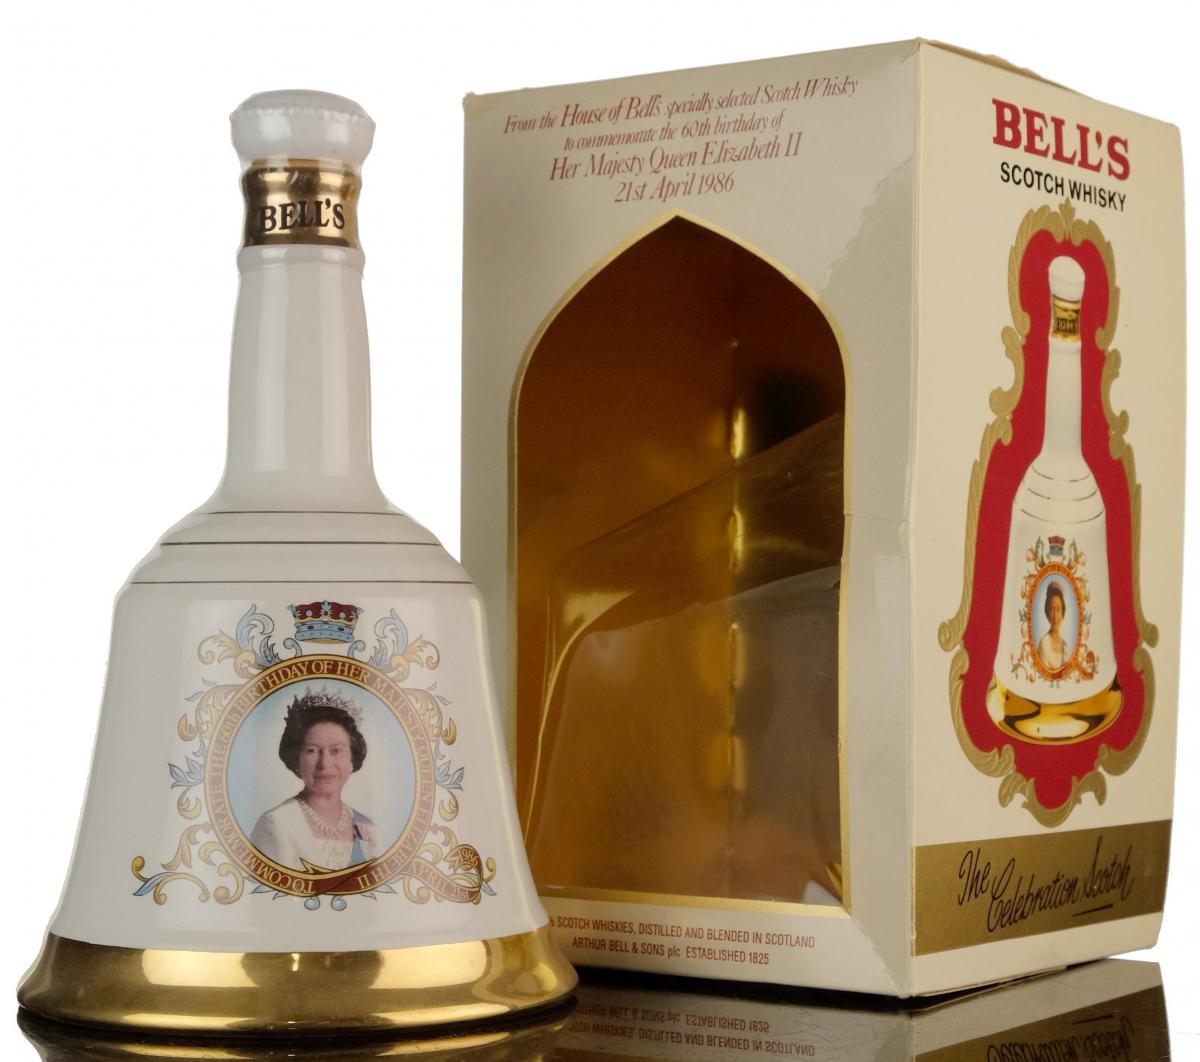 Bells To Commemorate The 60th Birthday Of Her Majesty Queen Elizabeth II